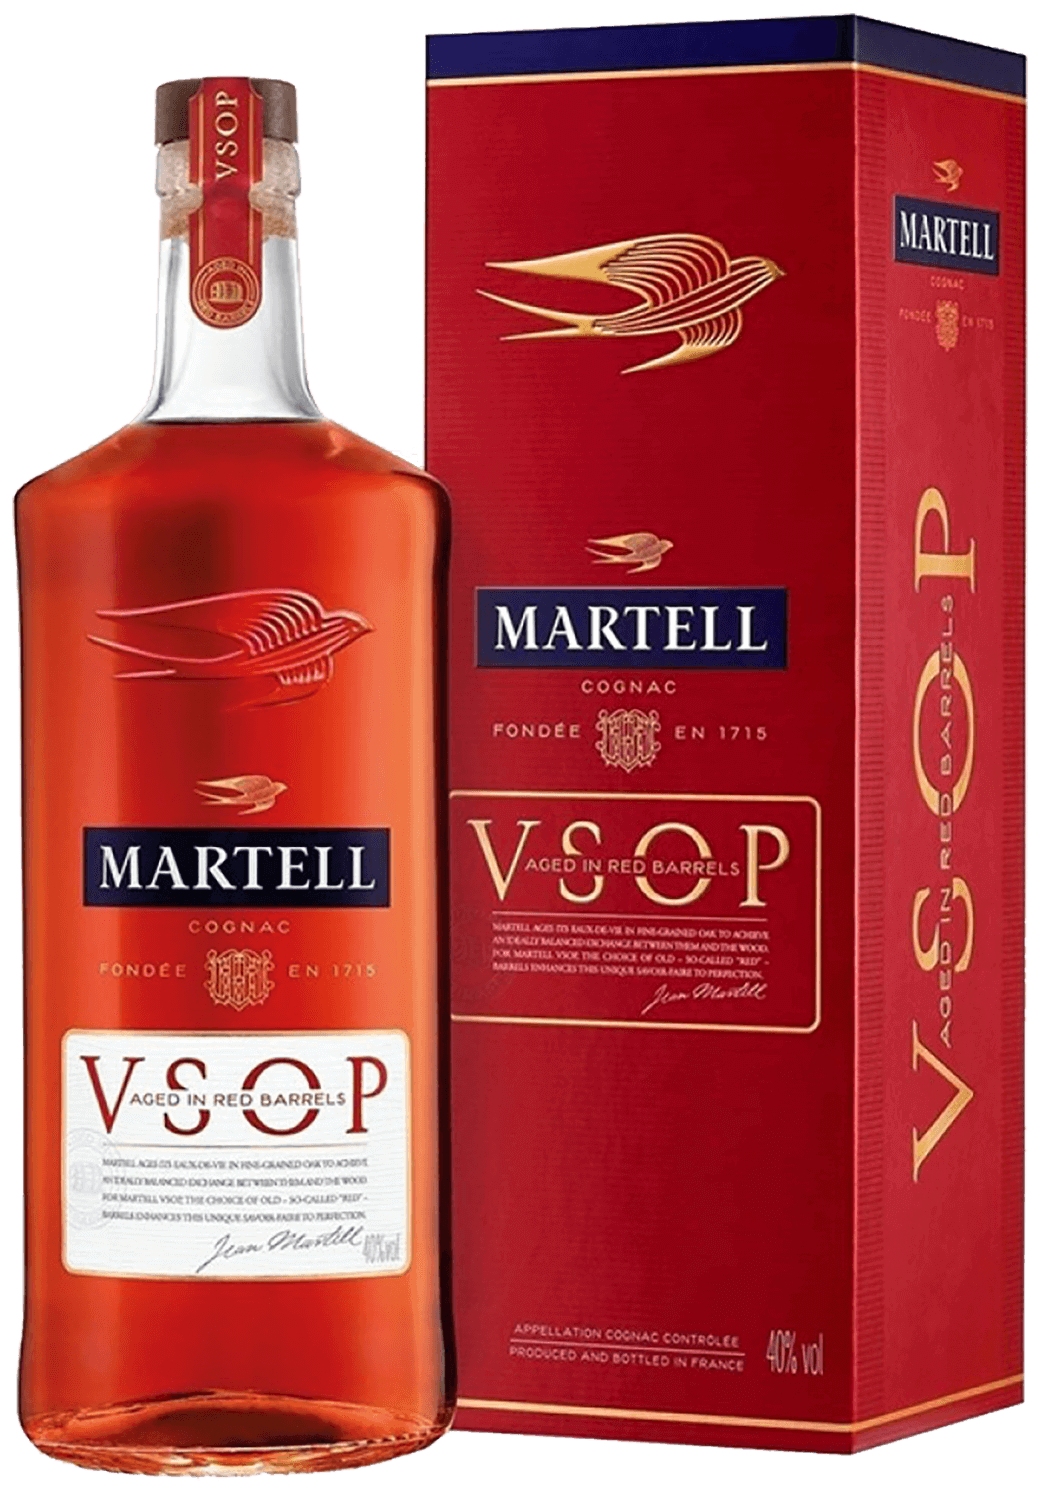 Martell VSOP Aged in Red Barrels (gift box) 46392